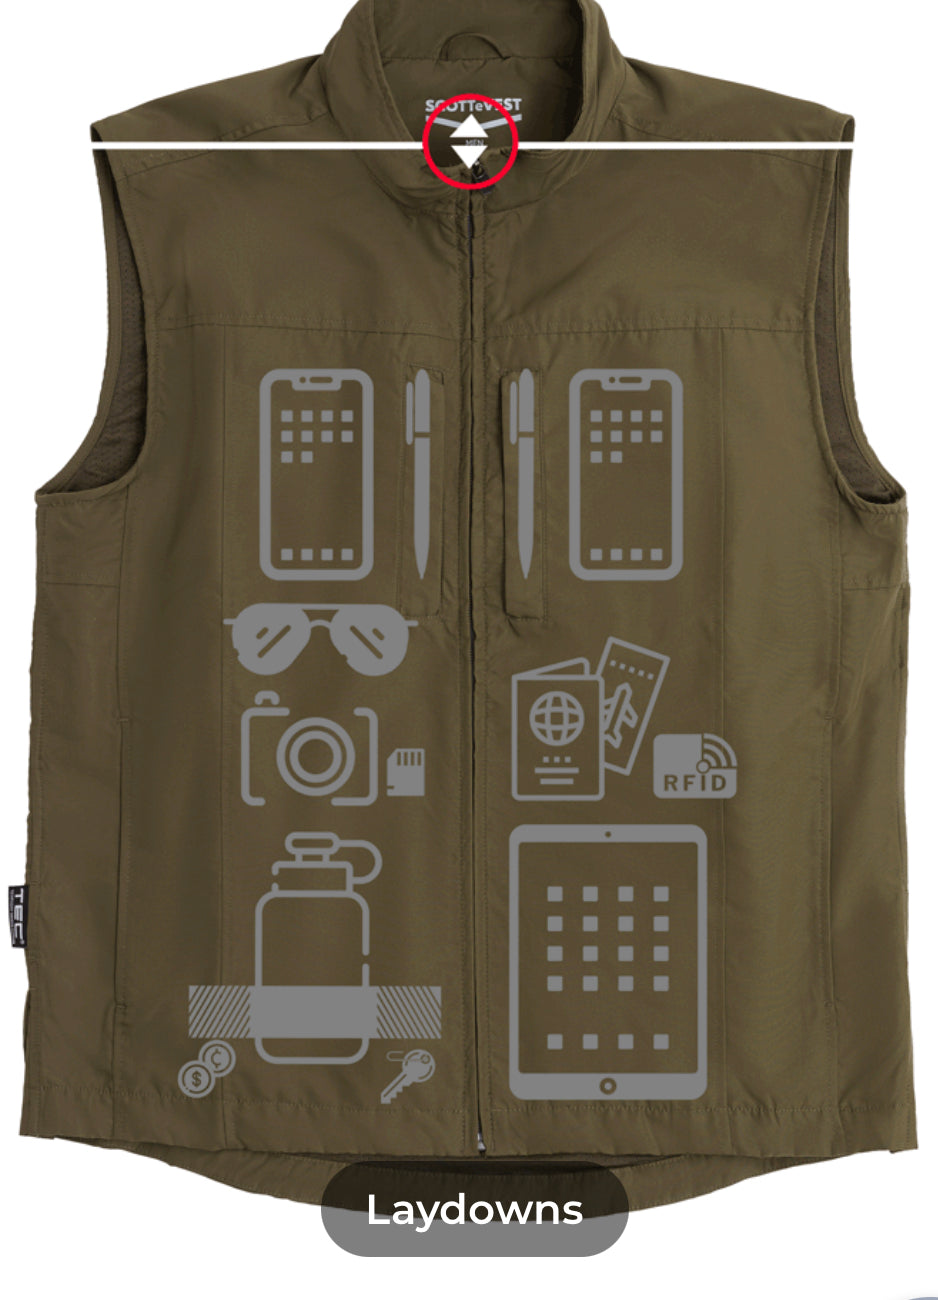 Chaleco de viaje repelente al agua Scott e Vest RFID para hombre (en negro, talla mediana, ¡último en stock!)